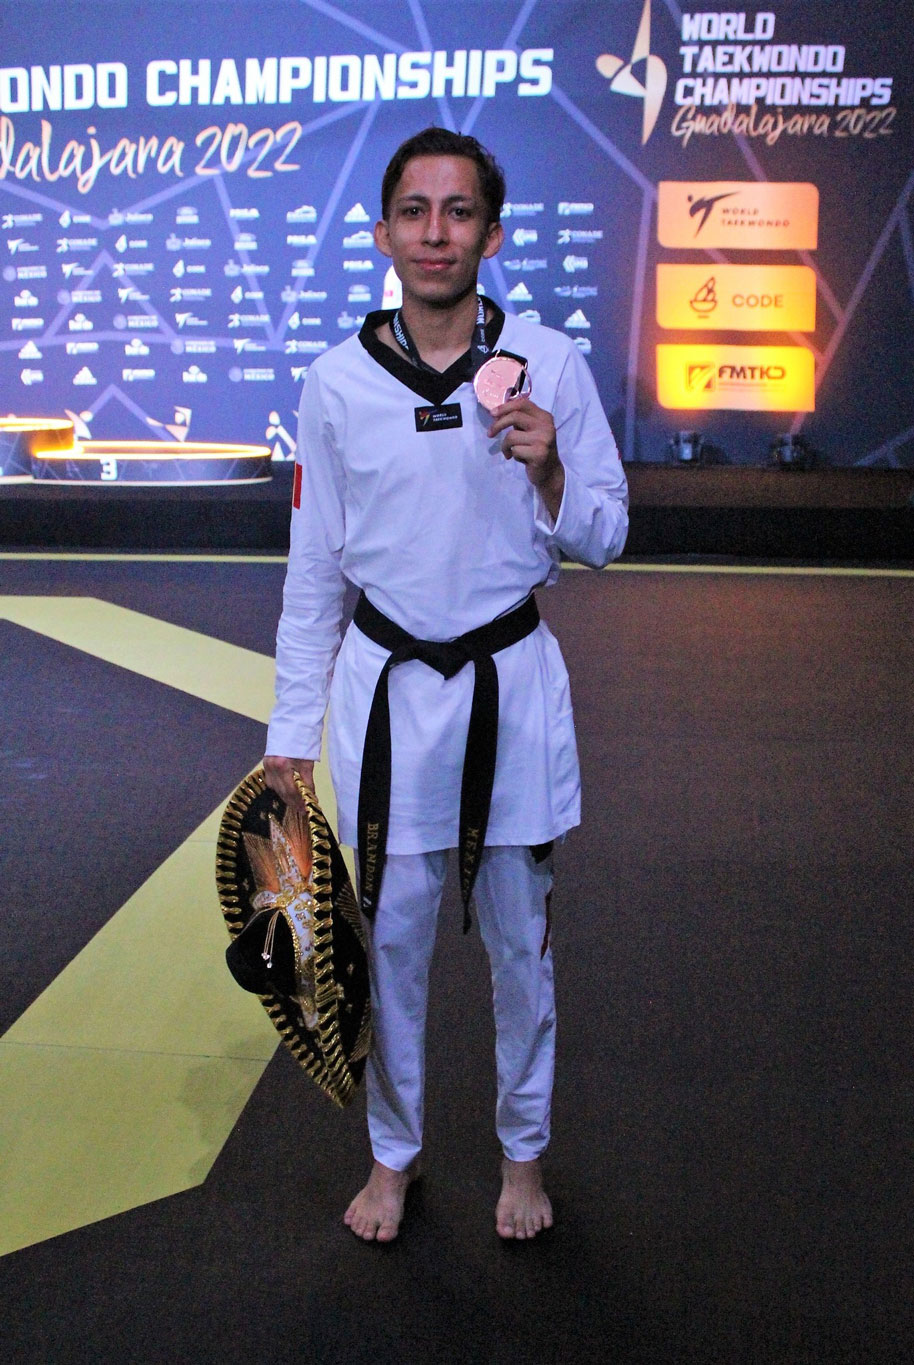 Brandon Plaza, Medalla de Bronce, Taekwondo.
Campeonato Mundial.